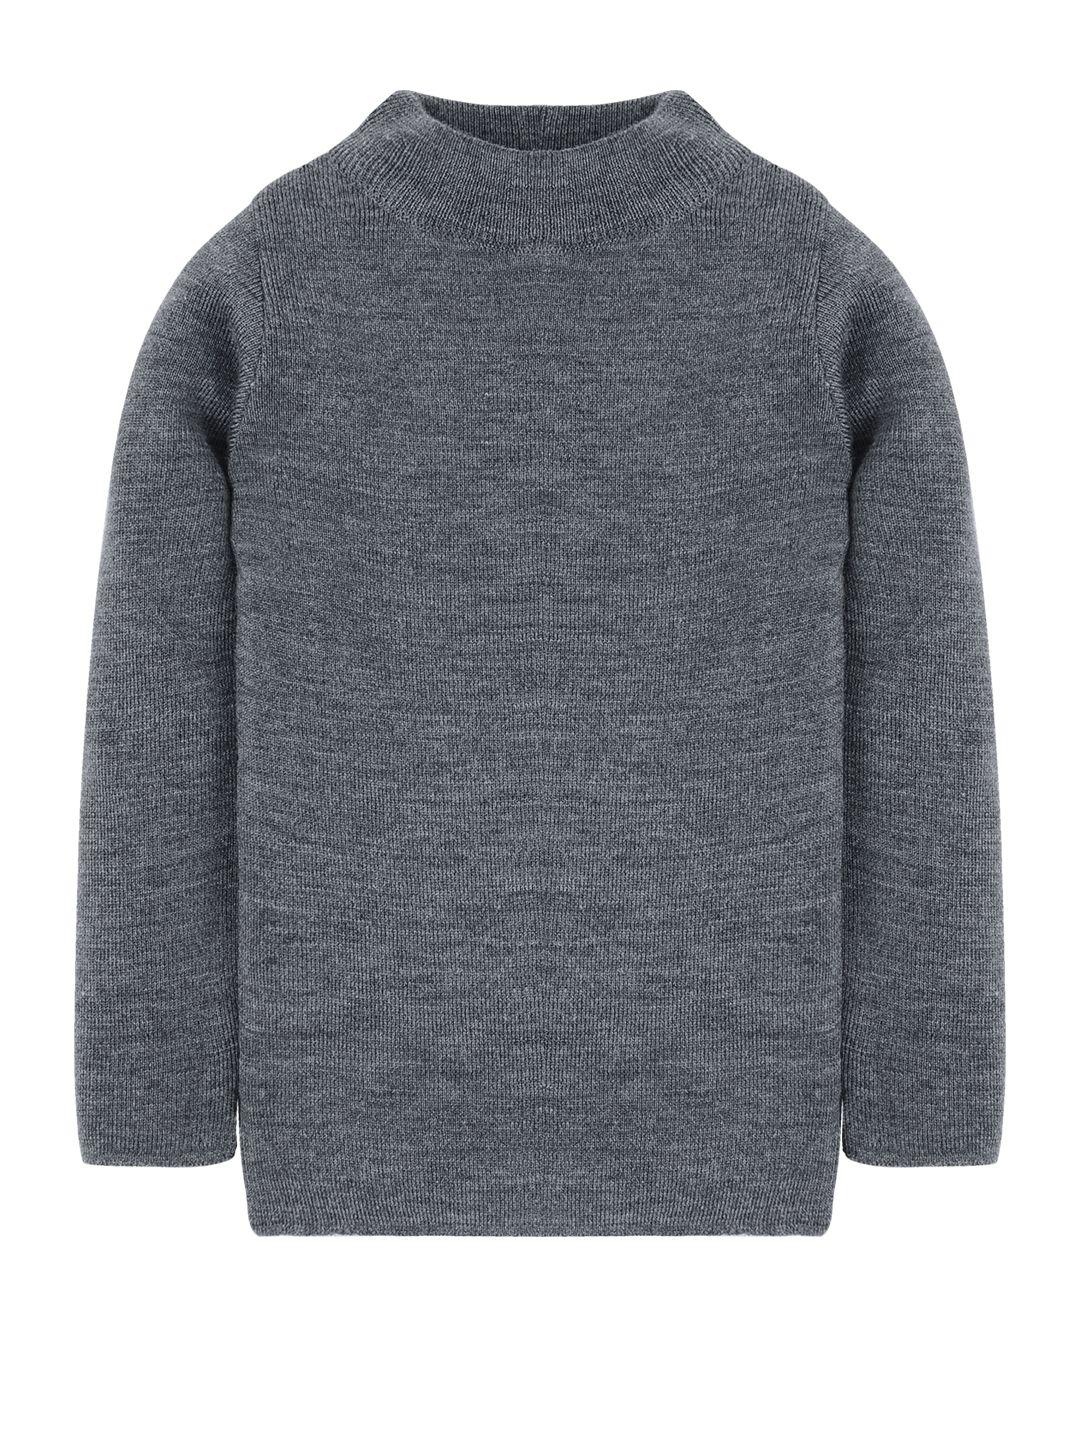 rvk kids grey solid sweater